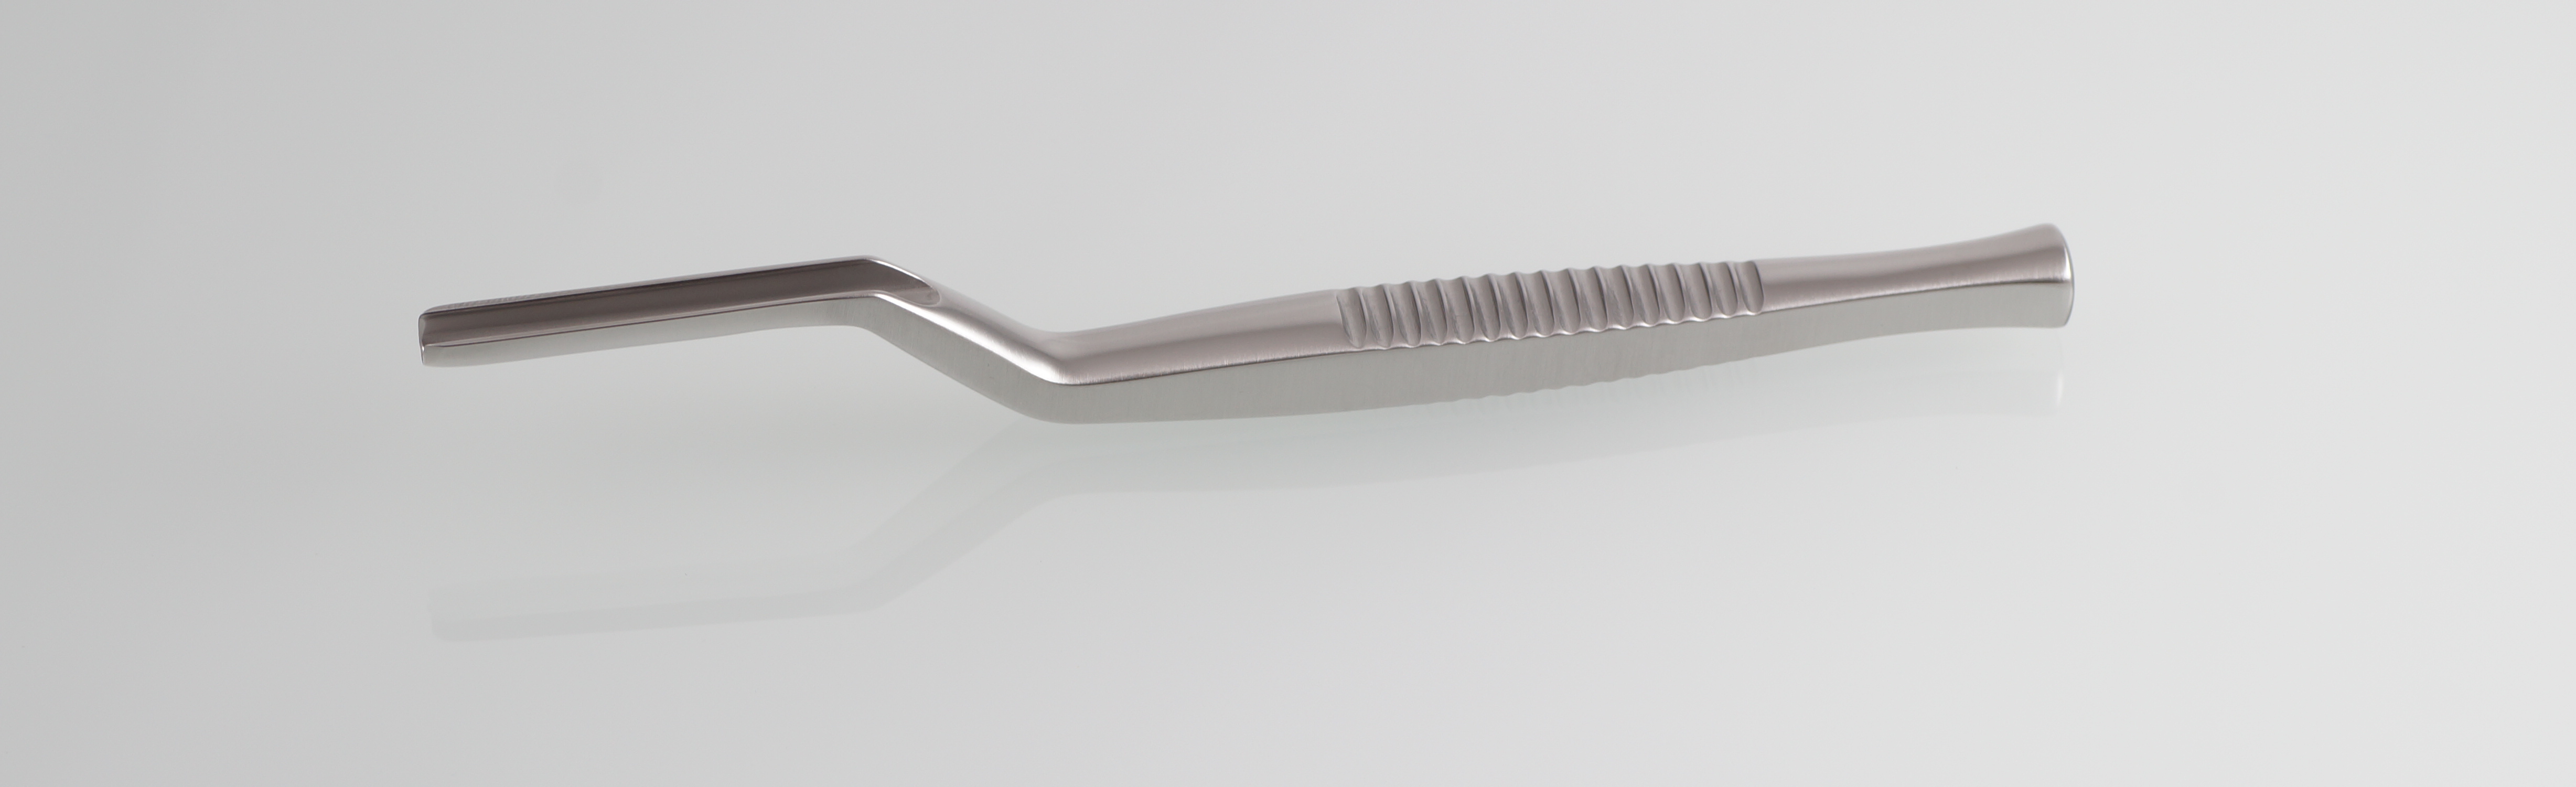 KILLIAN septum gouge round cutting edge bayonet shaped